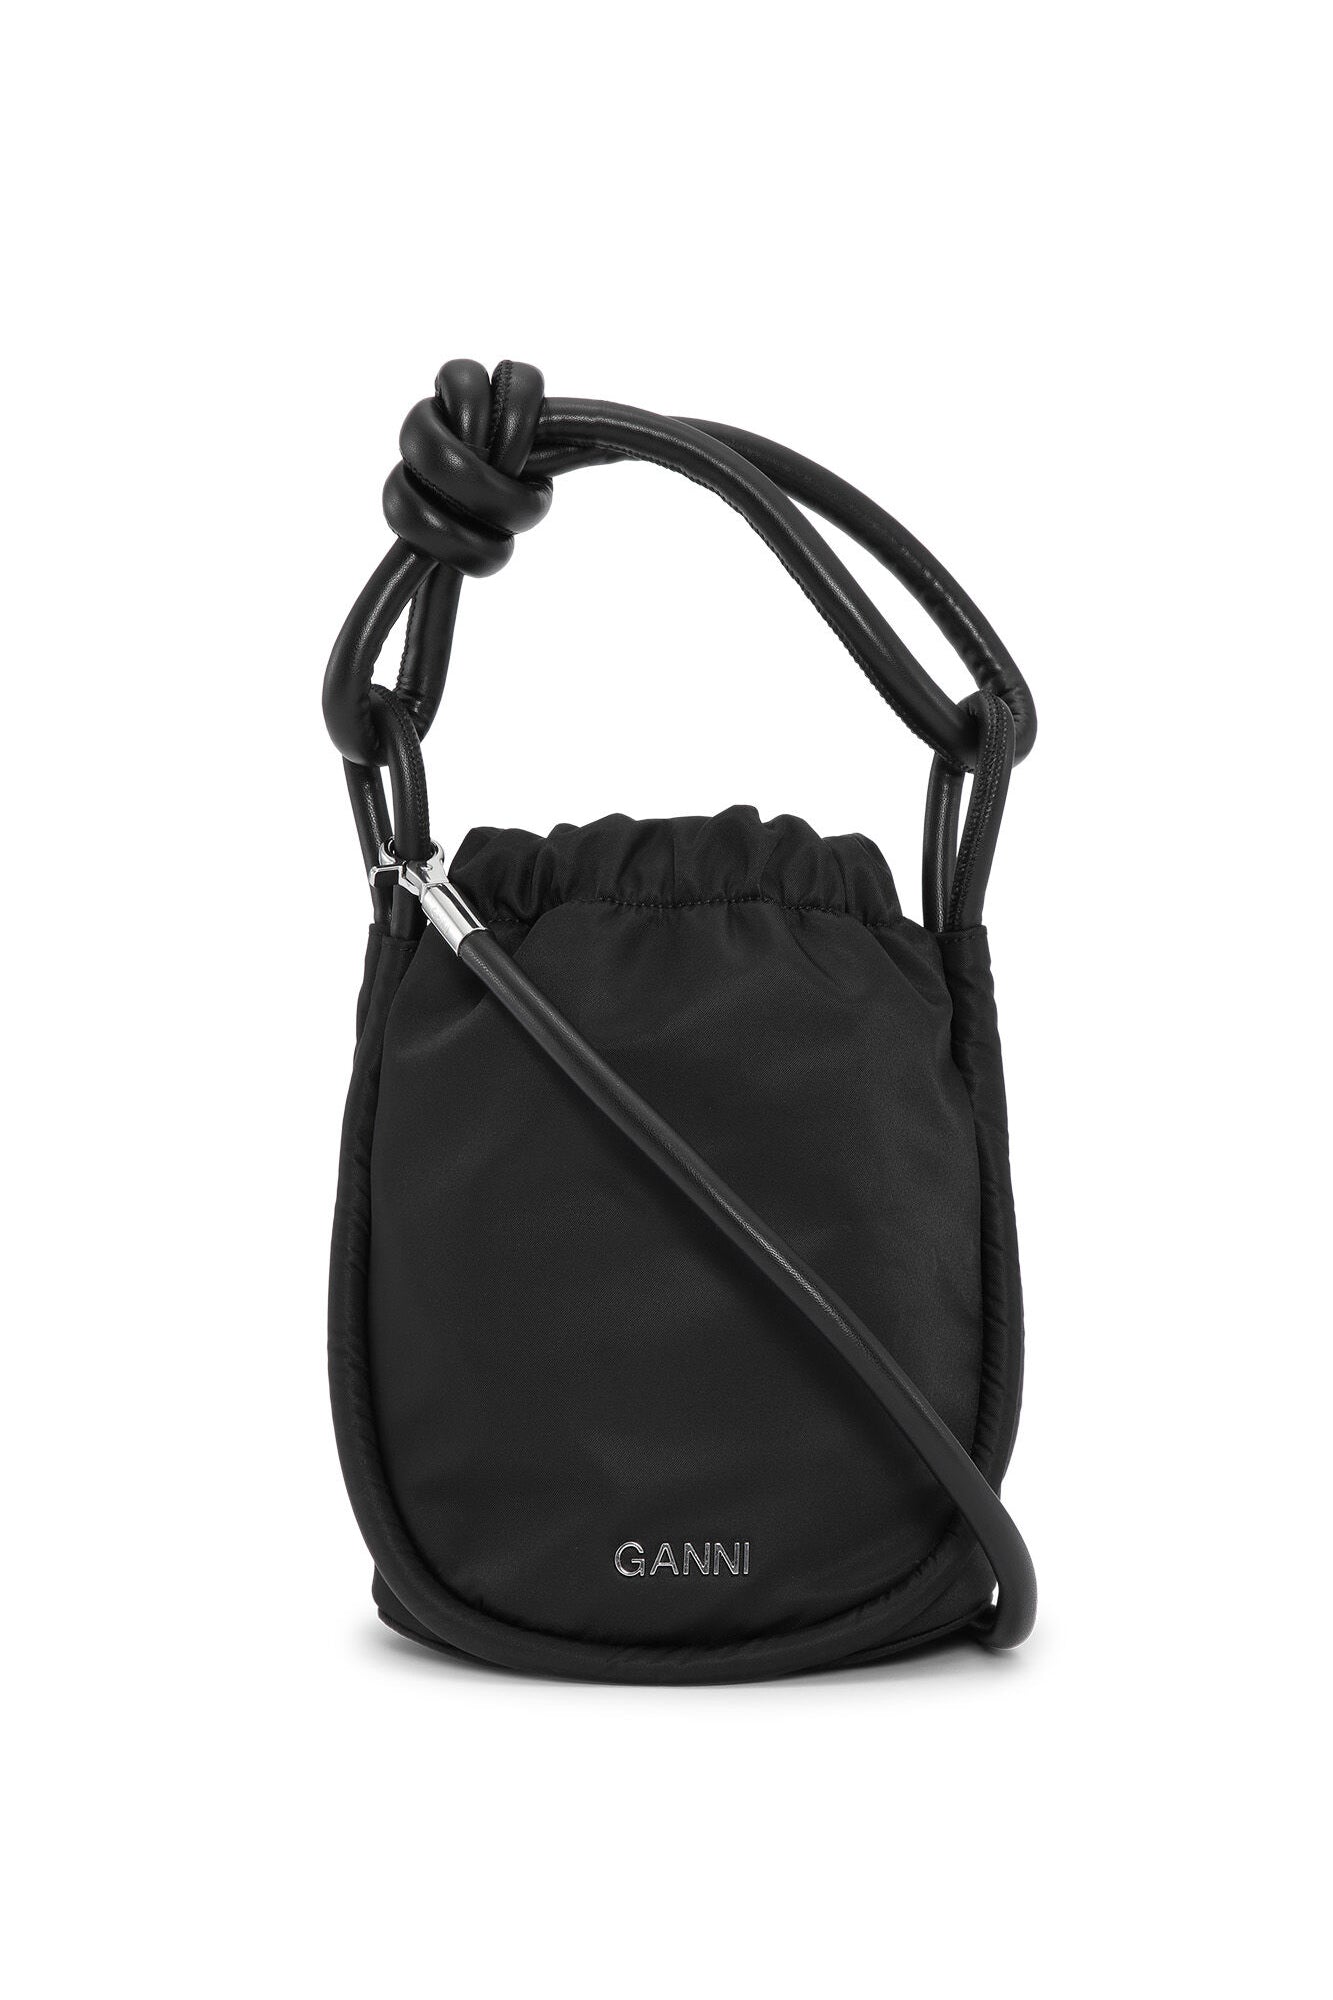    Ganni-Small-Black-Knot-Bucket-Bag-Black